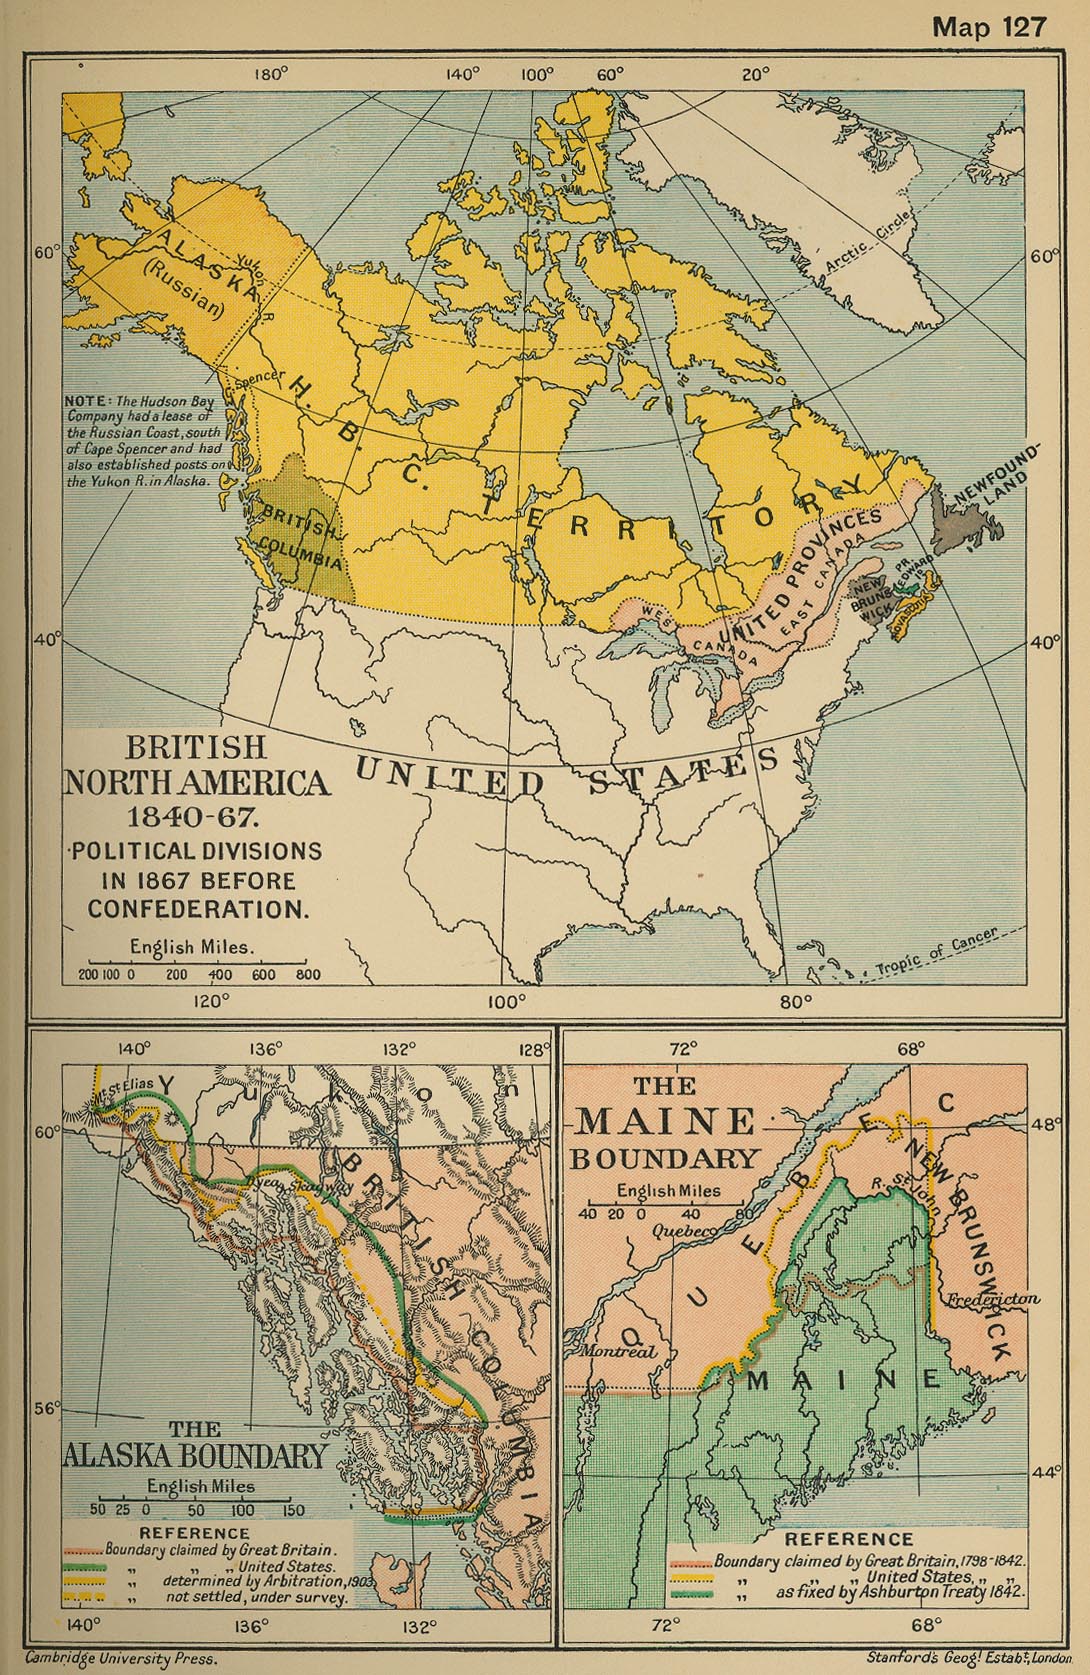 Map of British North America 1840-1867